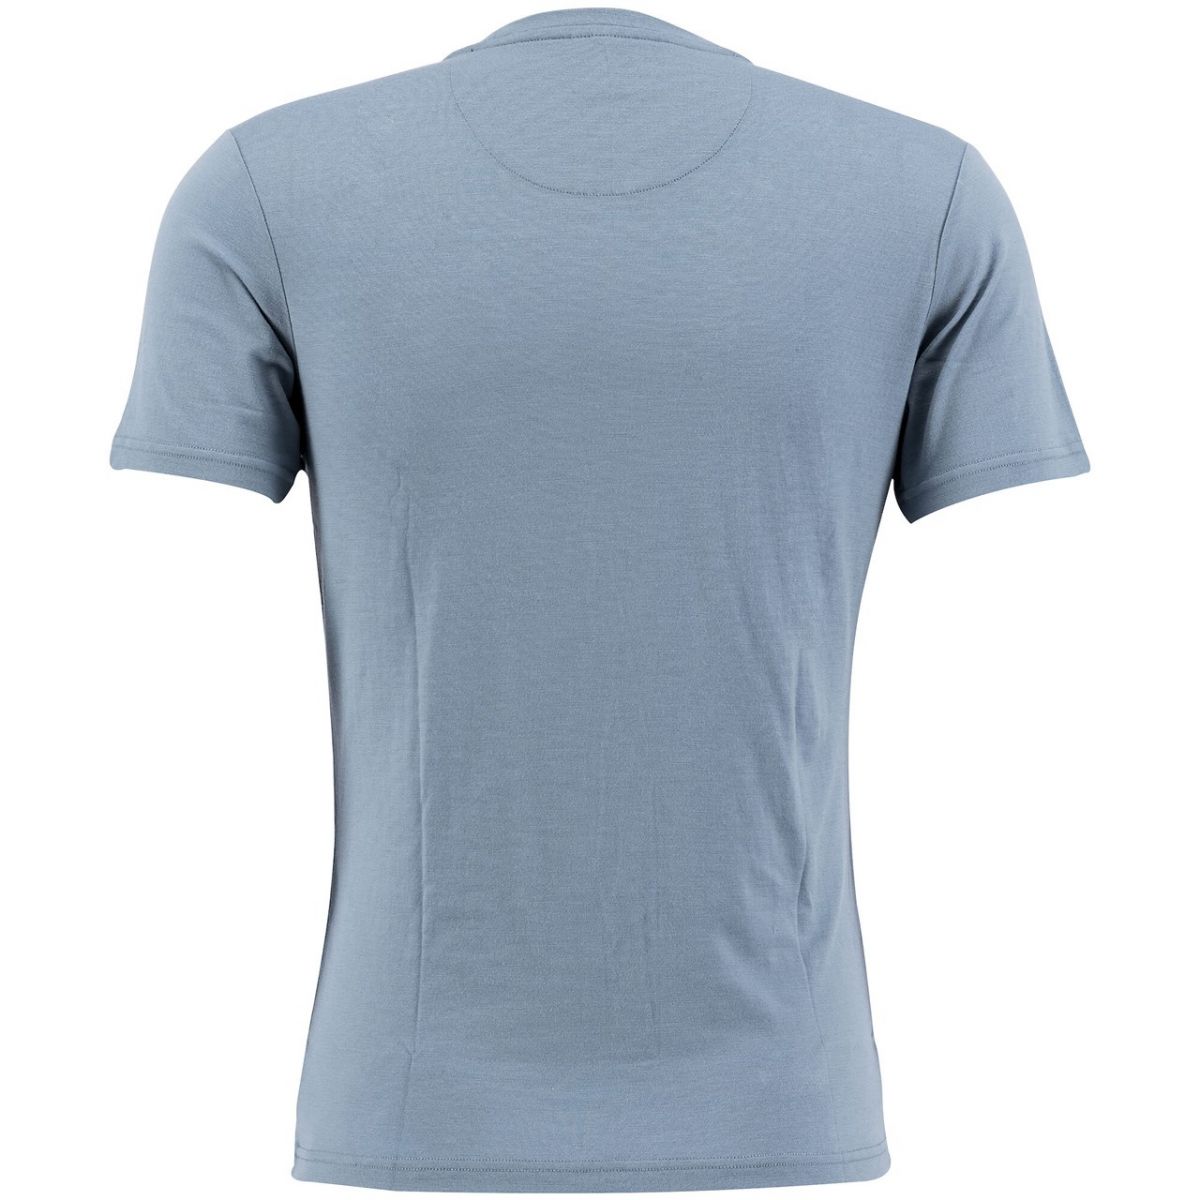 Ulvang Summer Wool, t-shirt, herren, blau